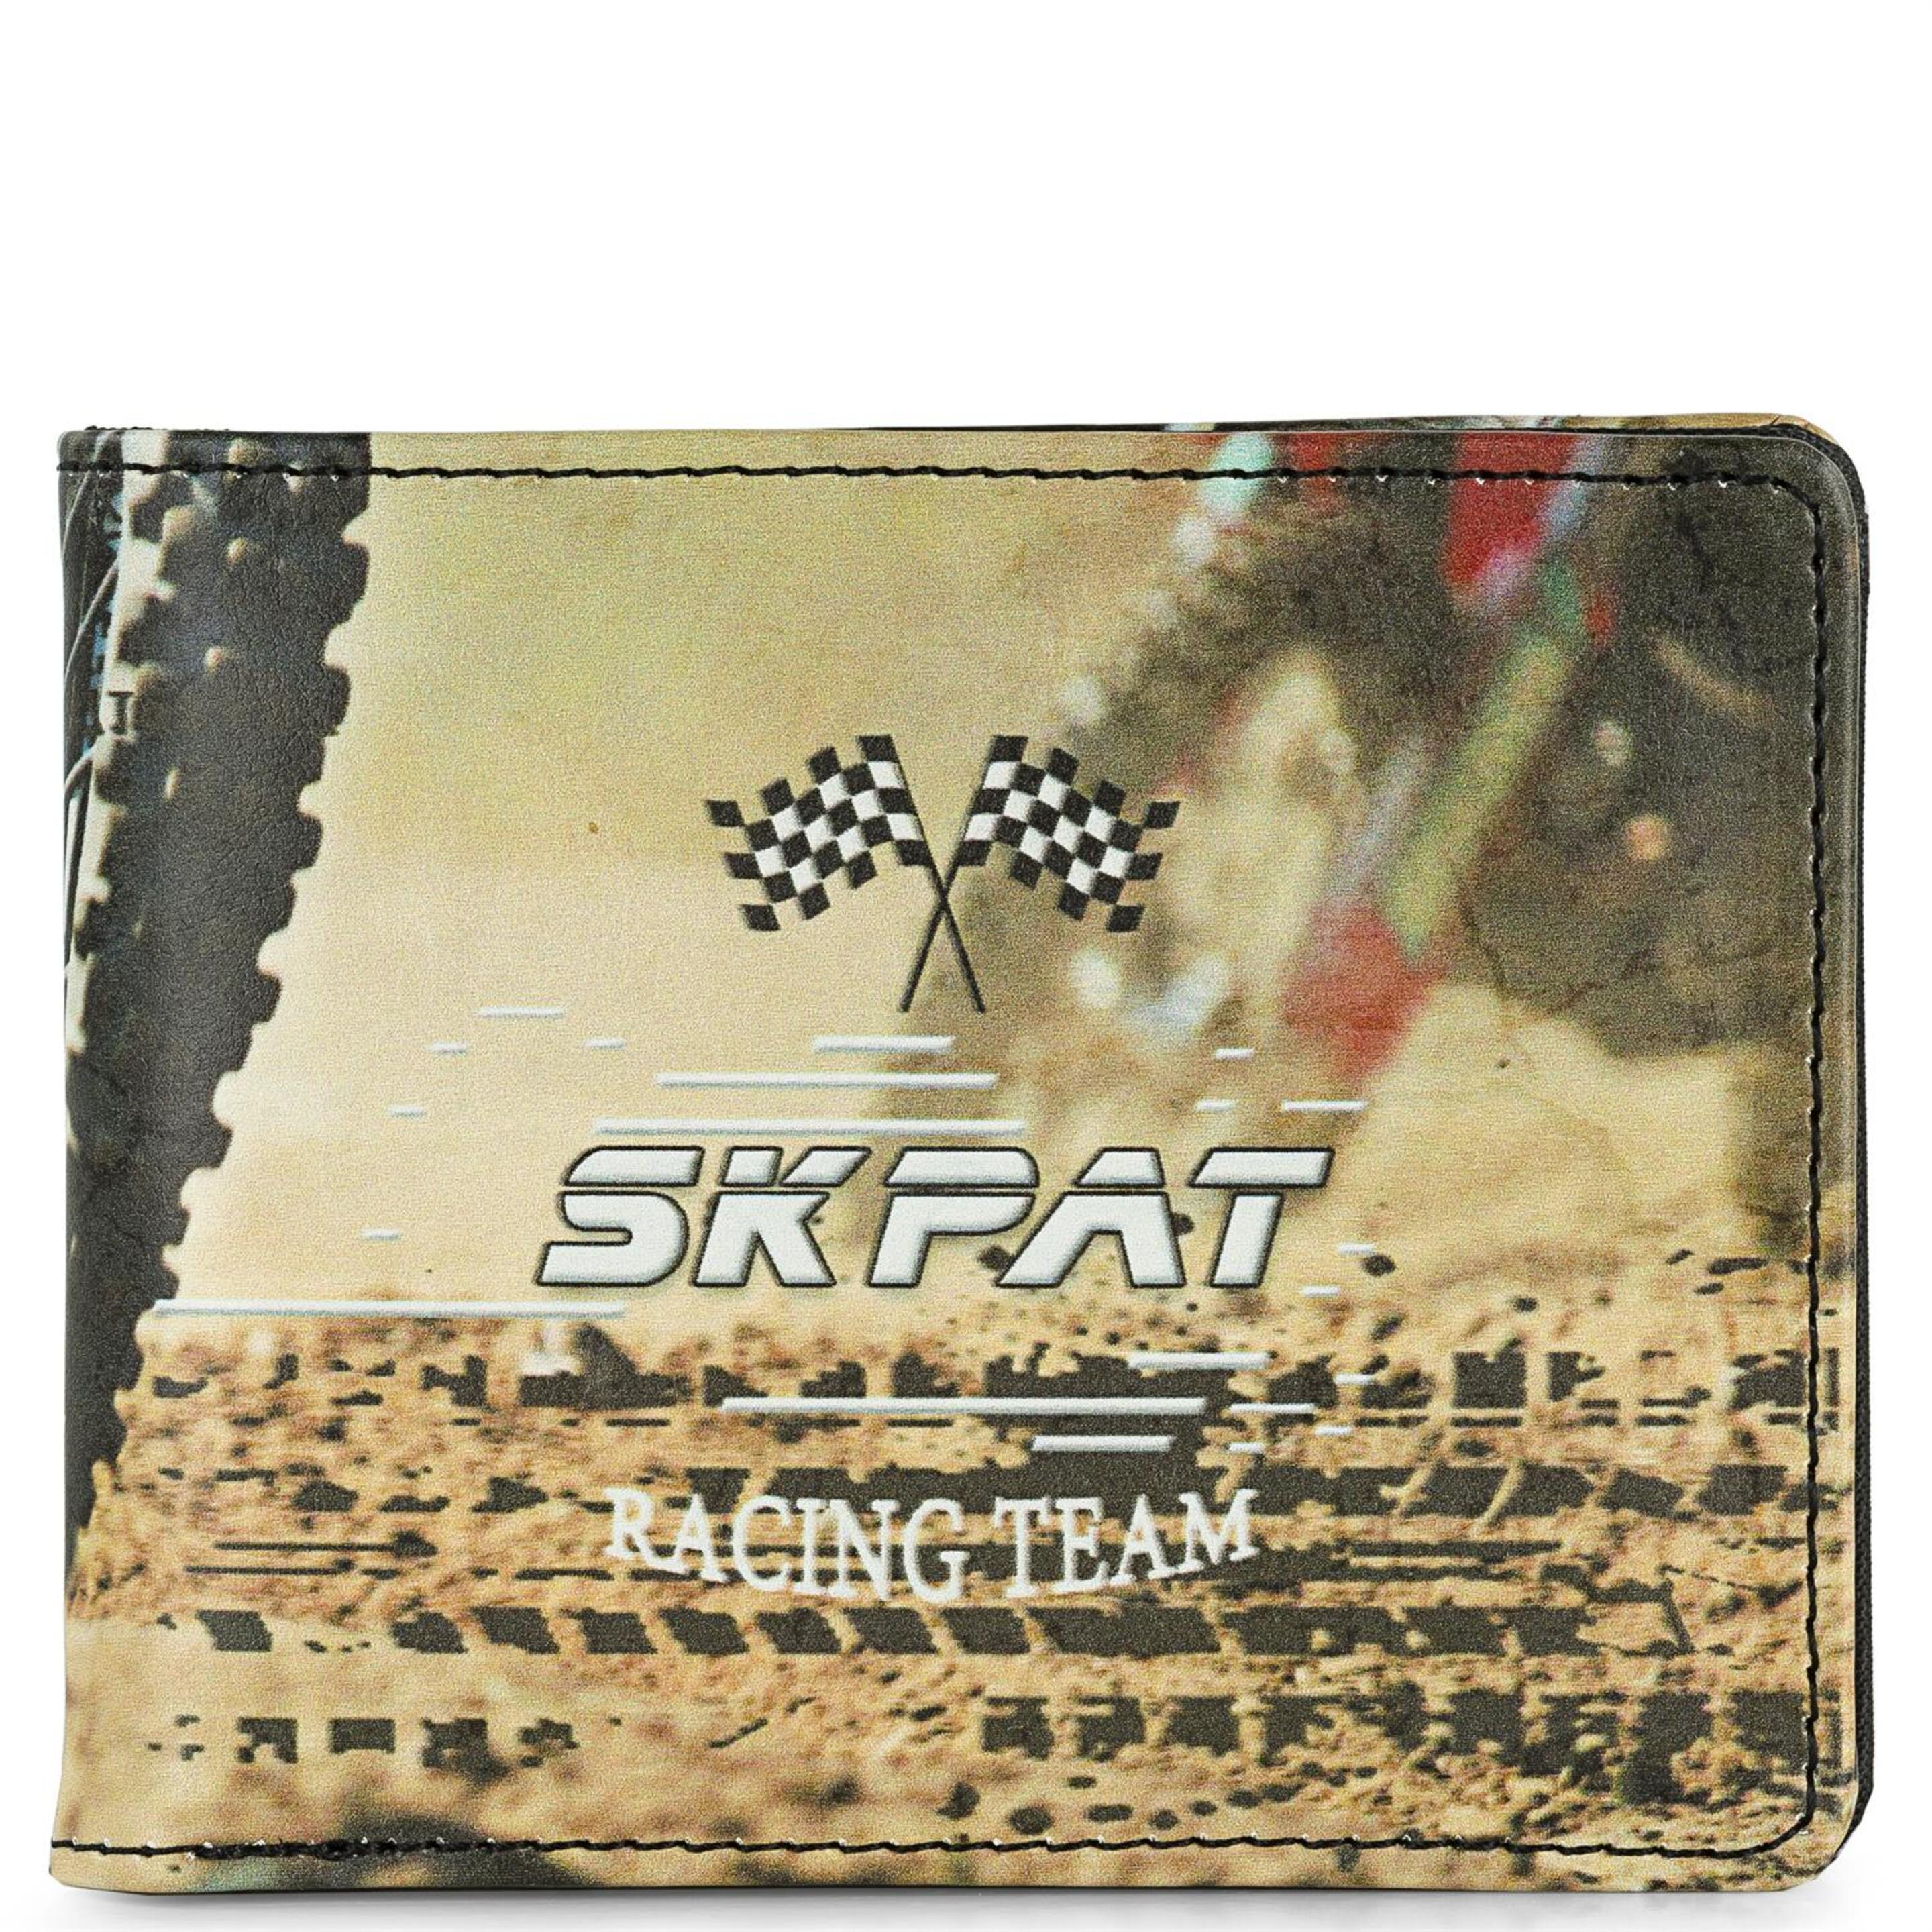 Cartera Skpat Racing Team - multicolor - 